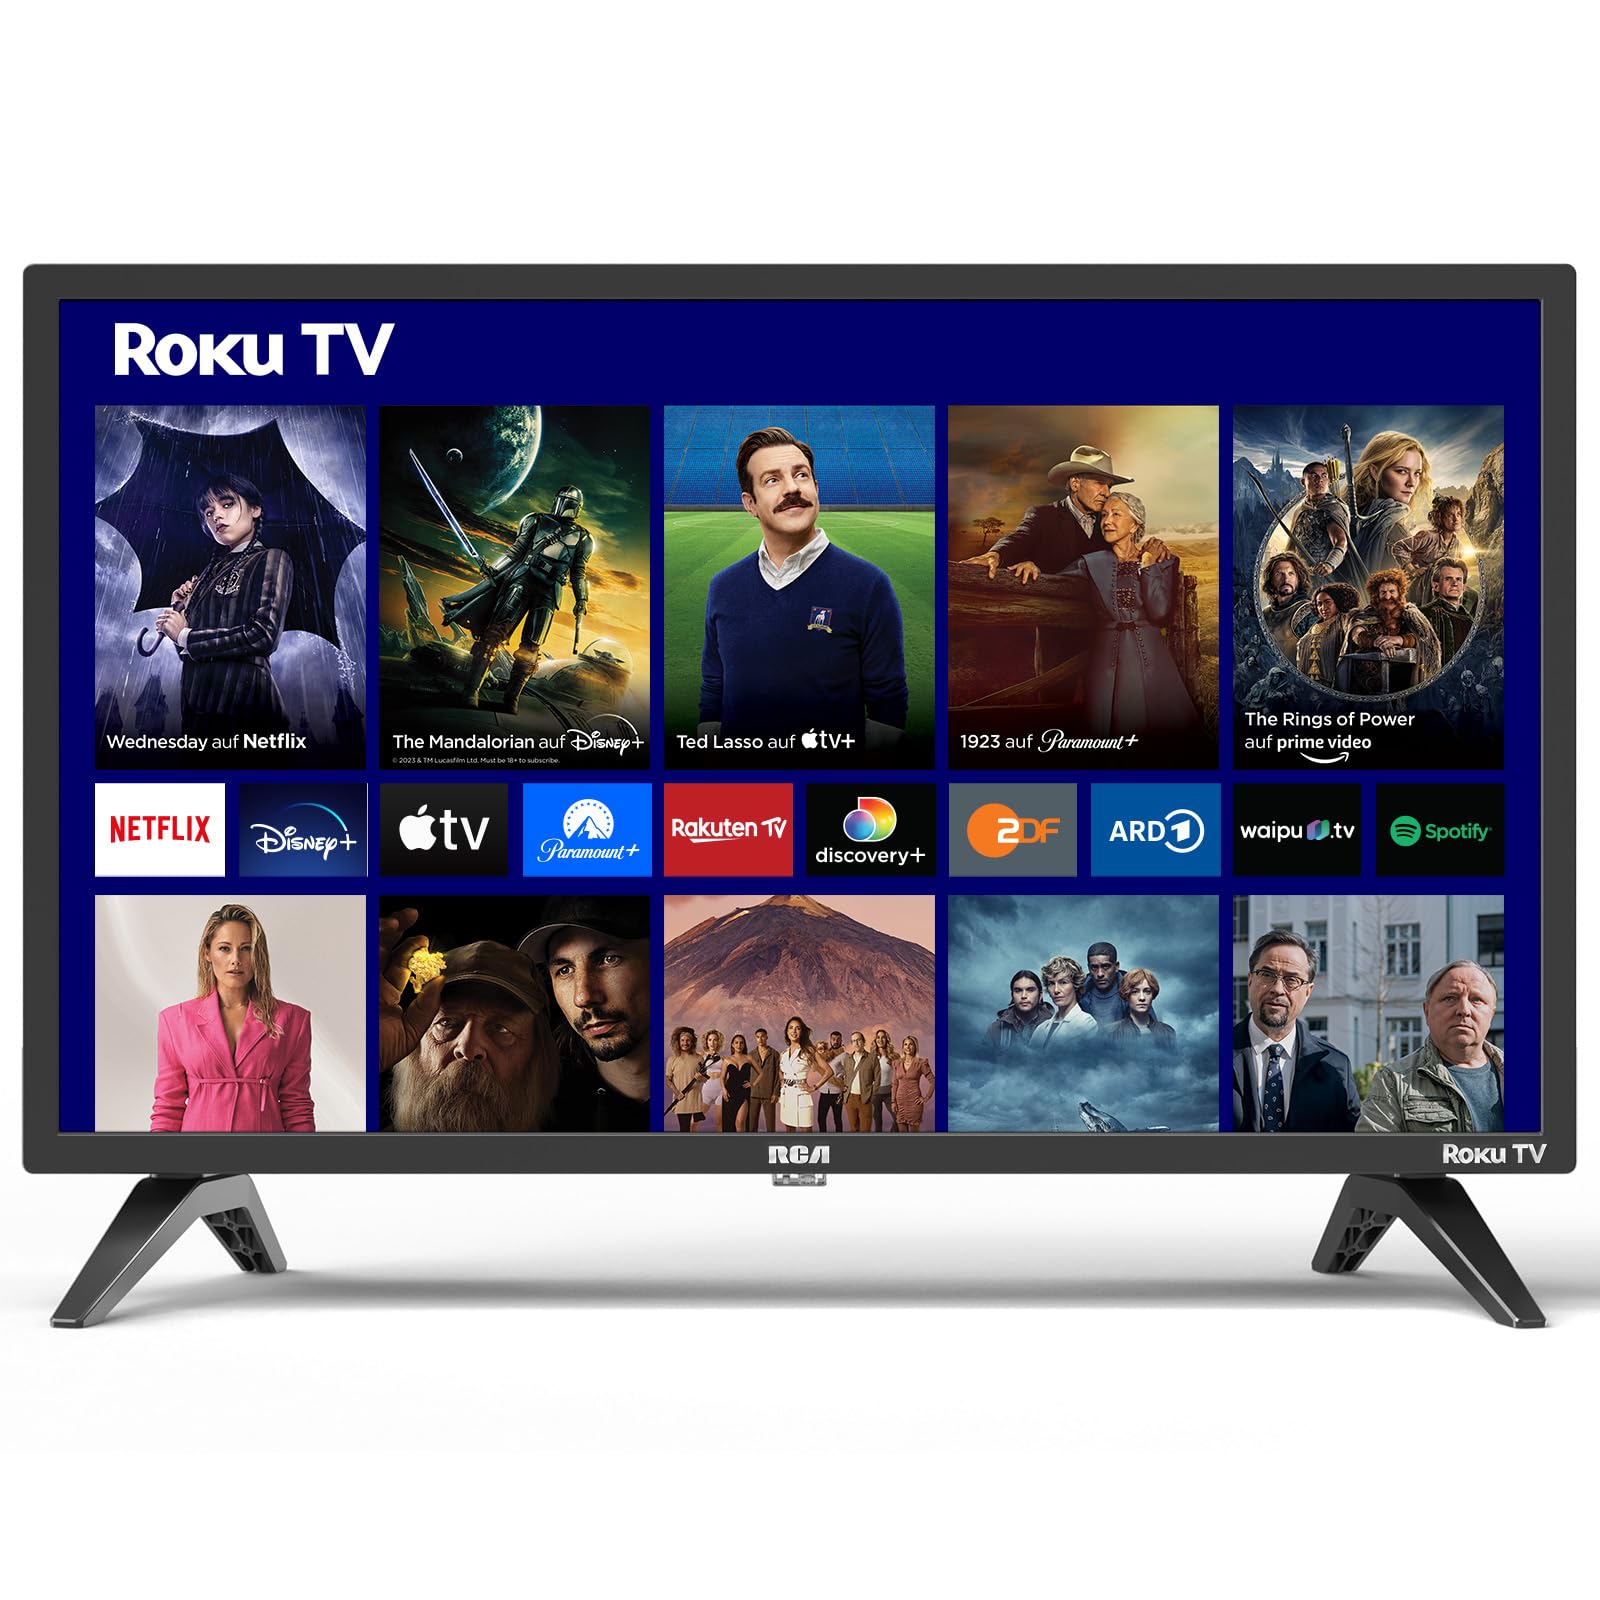 RCA Smart TV 24 Zoll Fernseher(Roku TV) HD Ready Dolby Audio Triple Tuner Apple TV+ Netflix Disney+ YouTube Prime Video USB HDMI WiFi